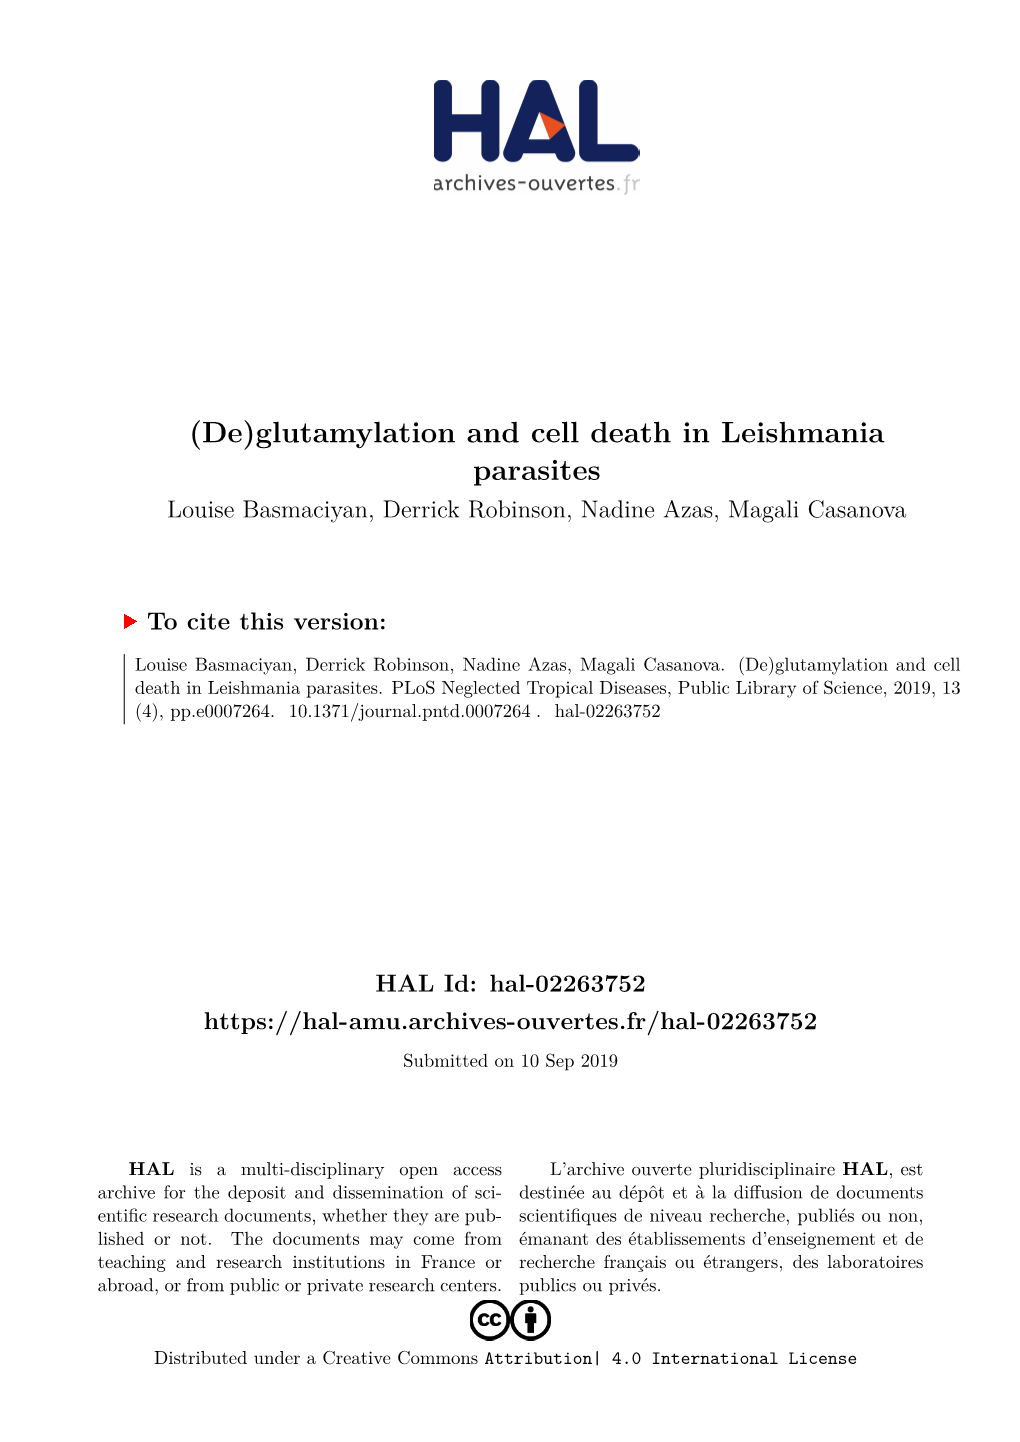 Glutamylation and Cell Death in Leishmania Parasites Louise Basmaciyan, Derrick Robinson, Nadine Azas, Magali Casanova